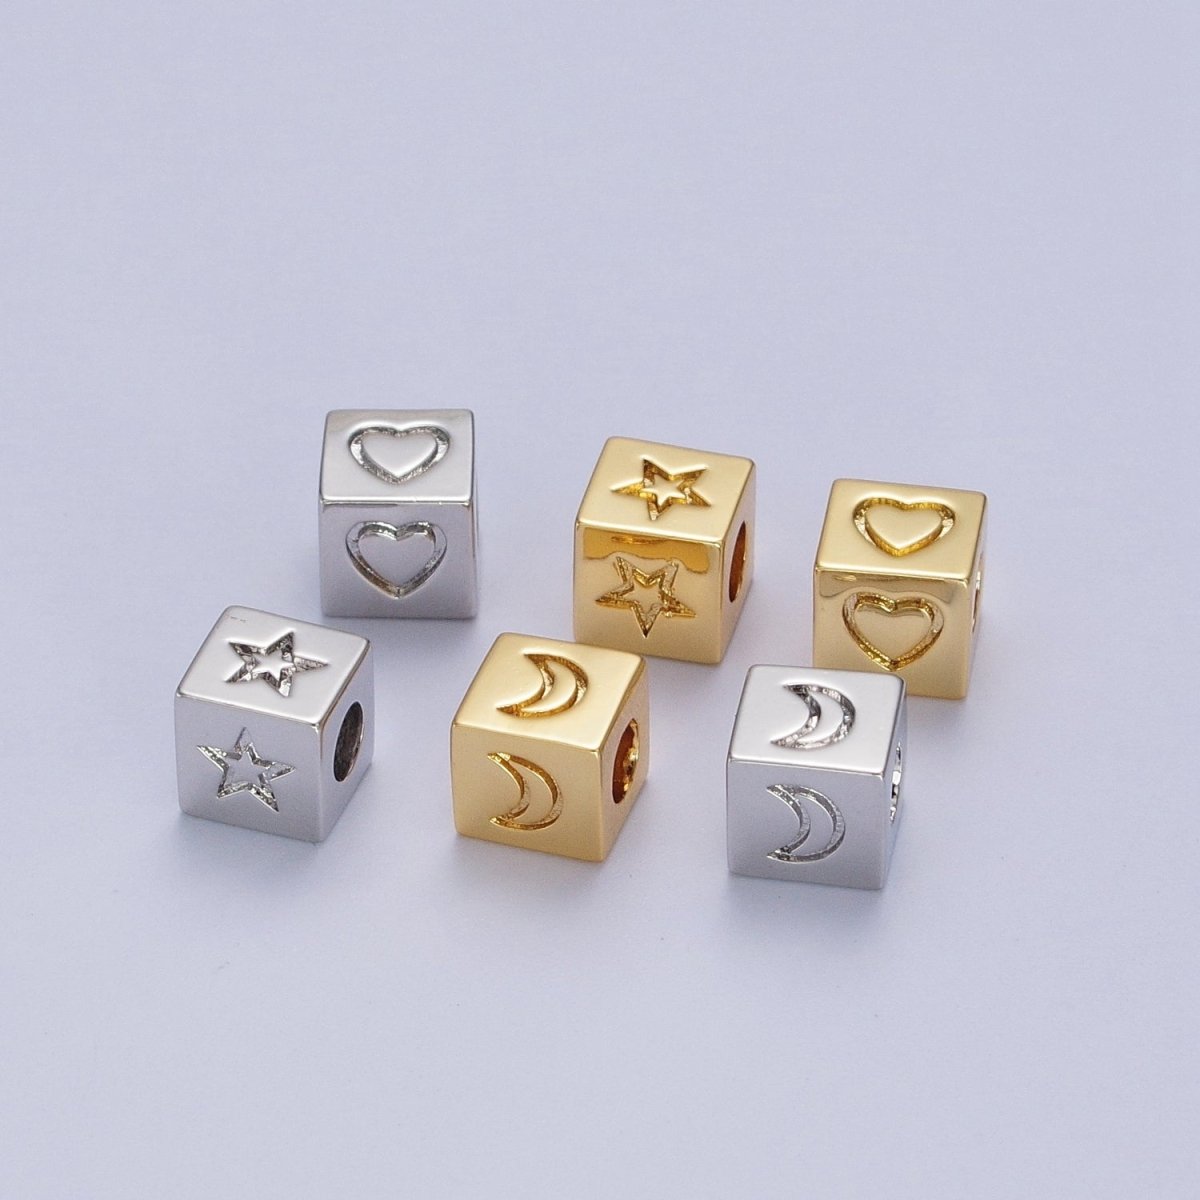 Star, Heart, Moon Engraved 6mm Cube Block Bead in Gold & Silver | B-676 B-682 B-688 B-780 B-859 B-860 - DLUXCA